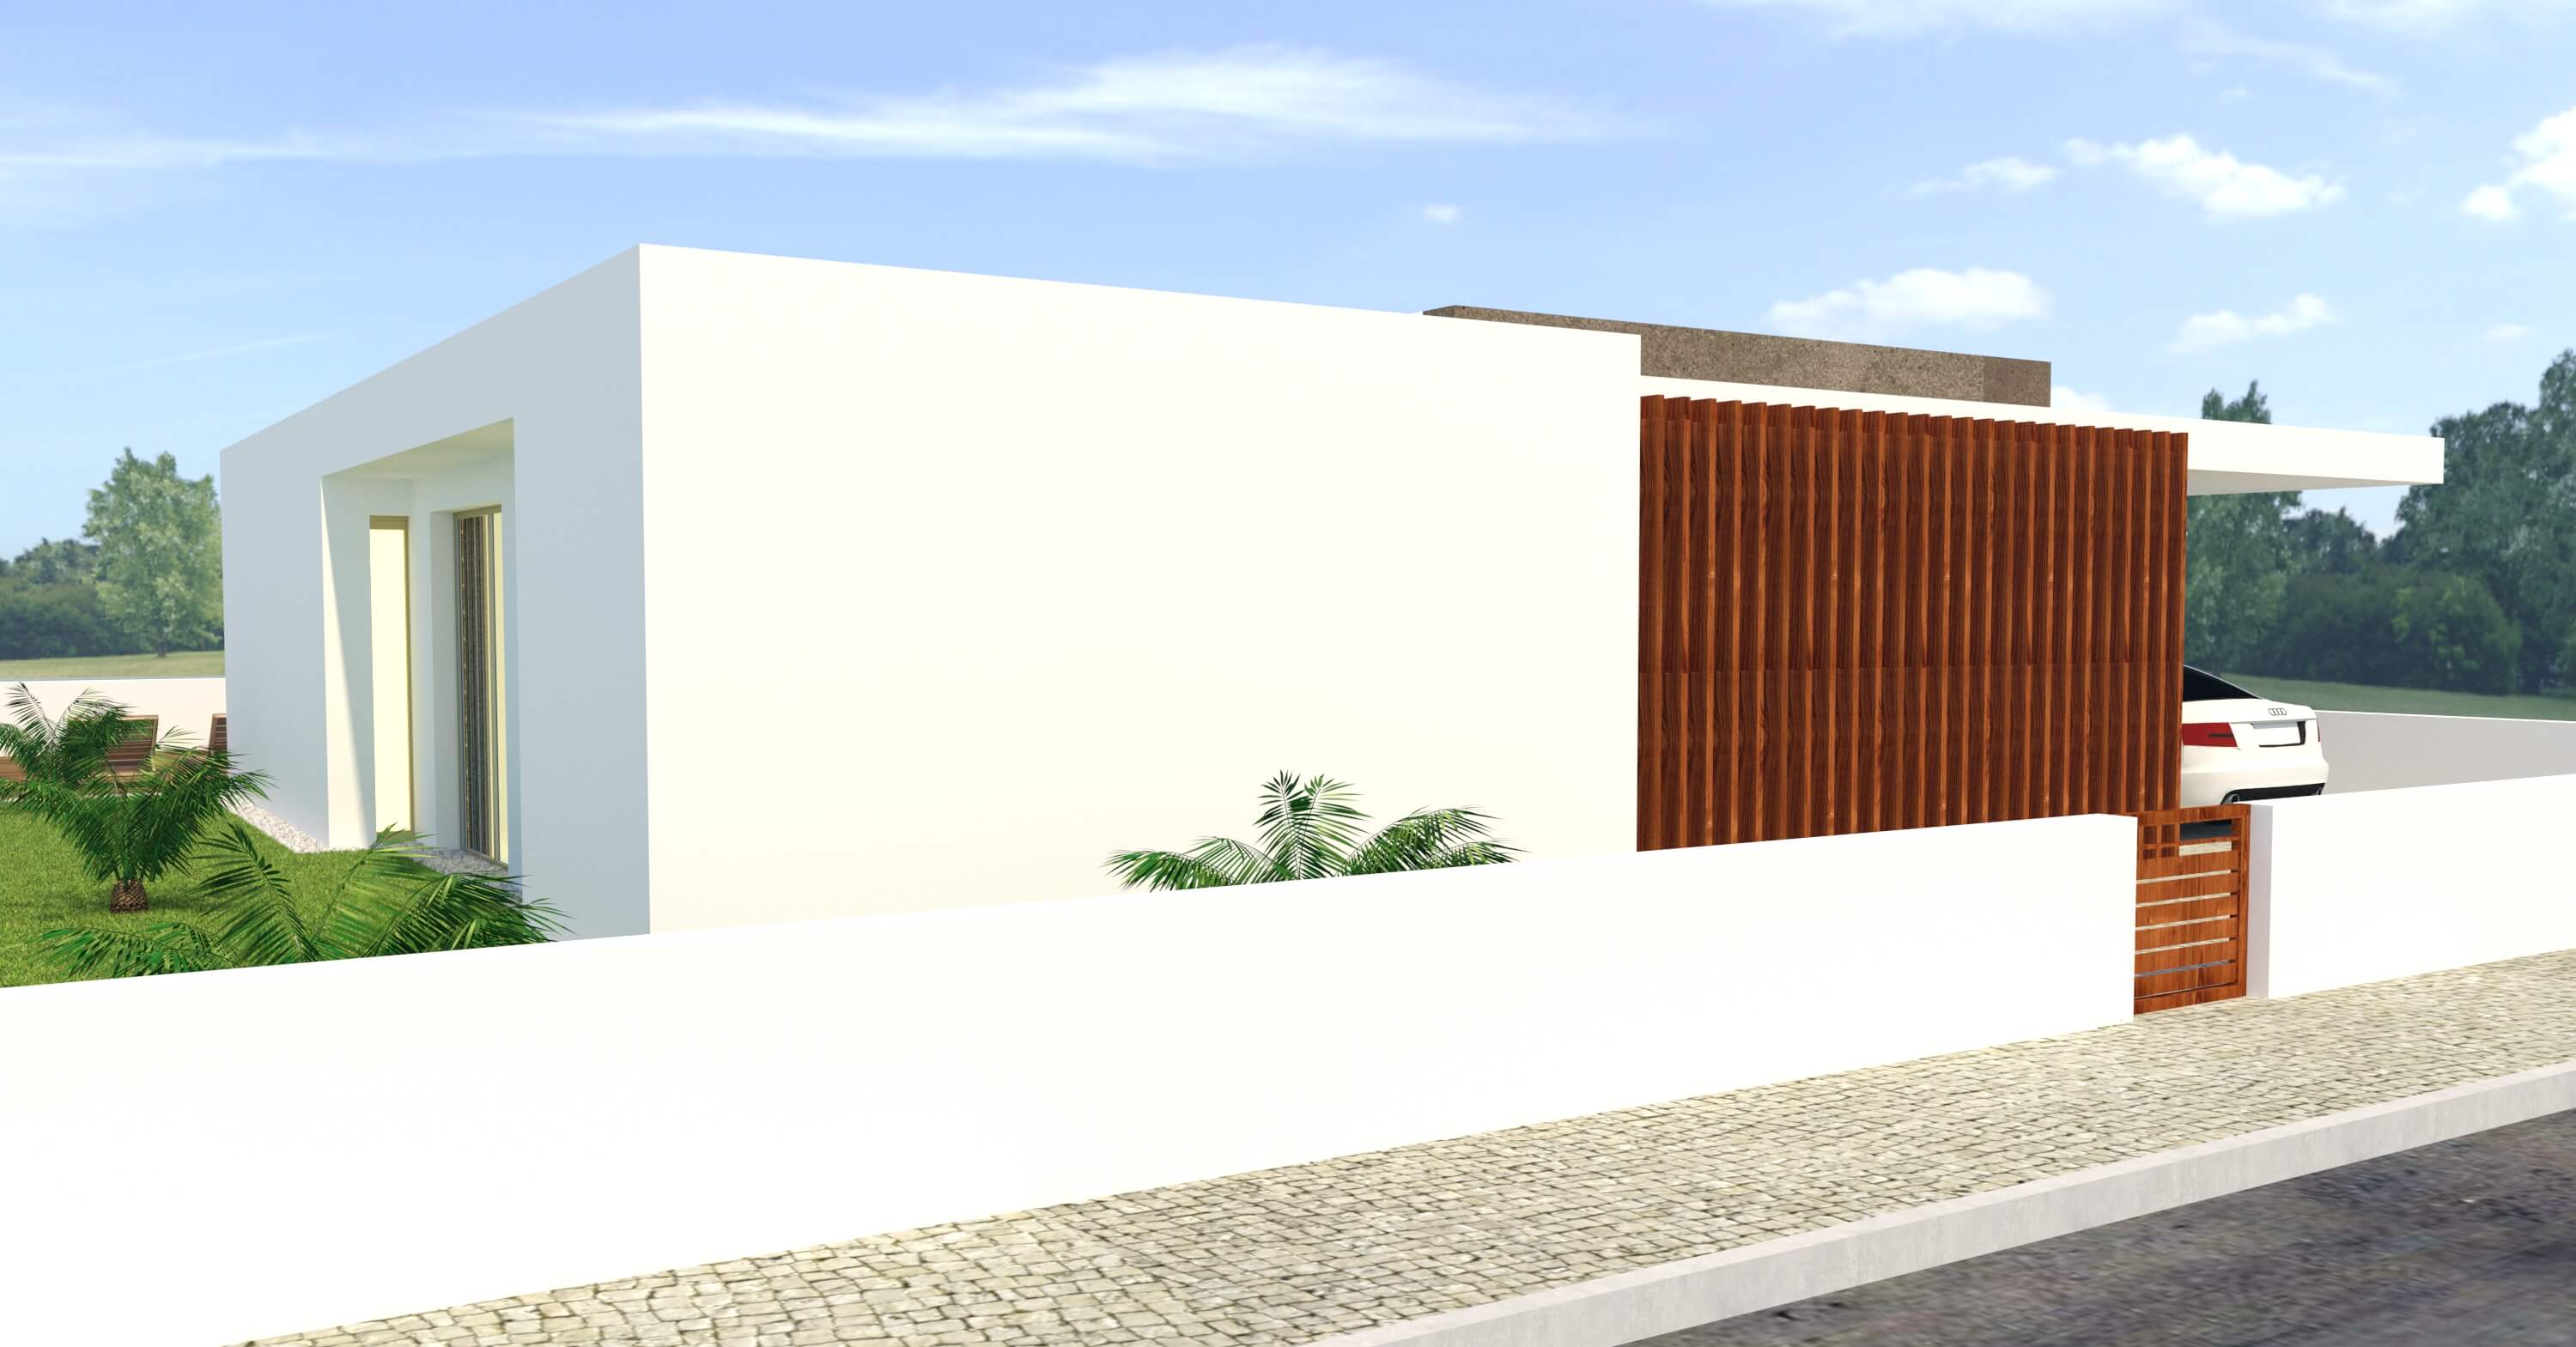 Three-Bedroom Villa in Portugal Slide Image 4